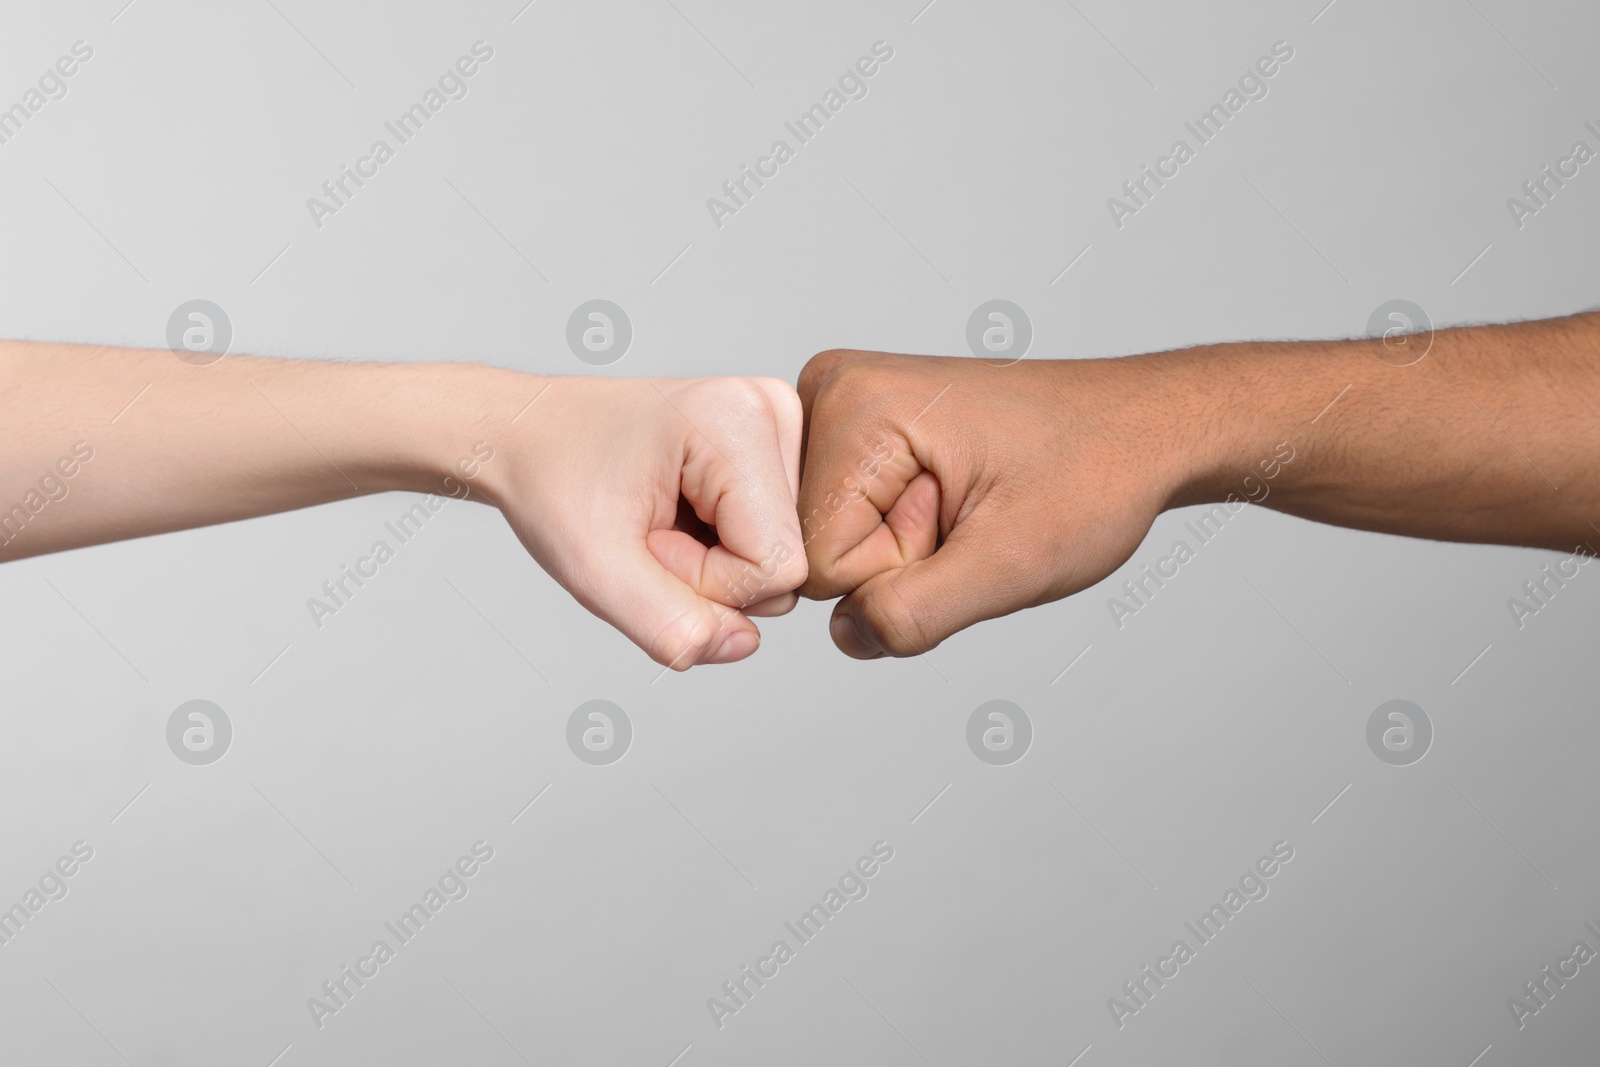 Photo of International relationships. People making fist bump on light grey background, closeup